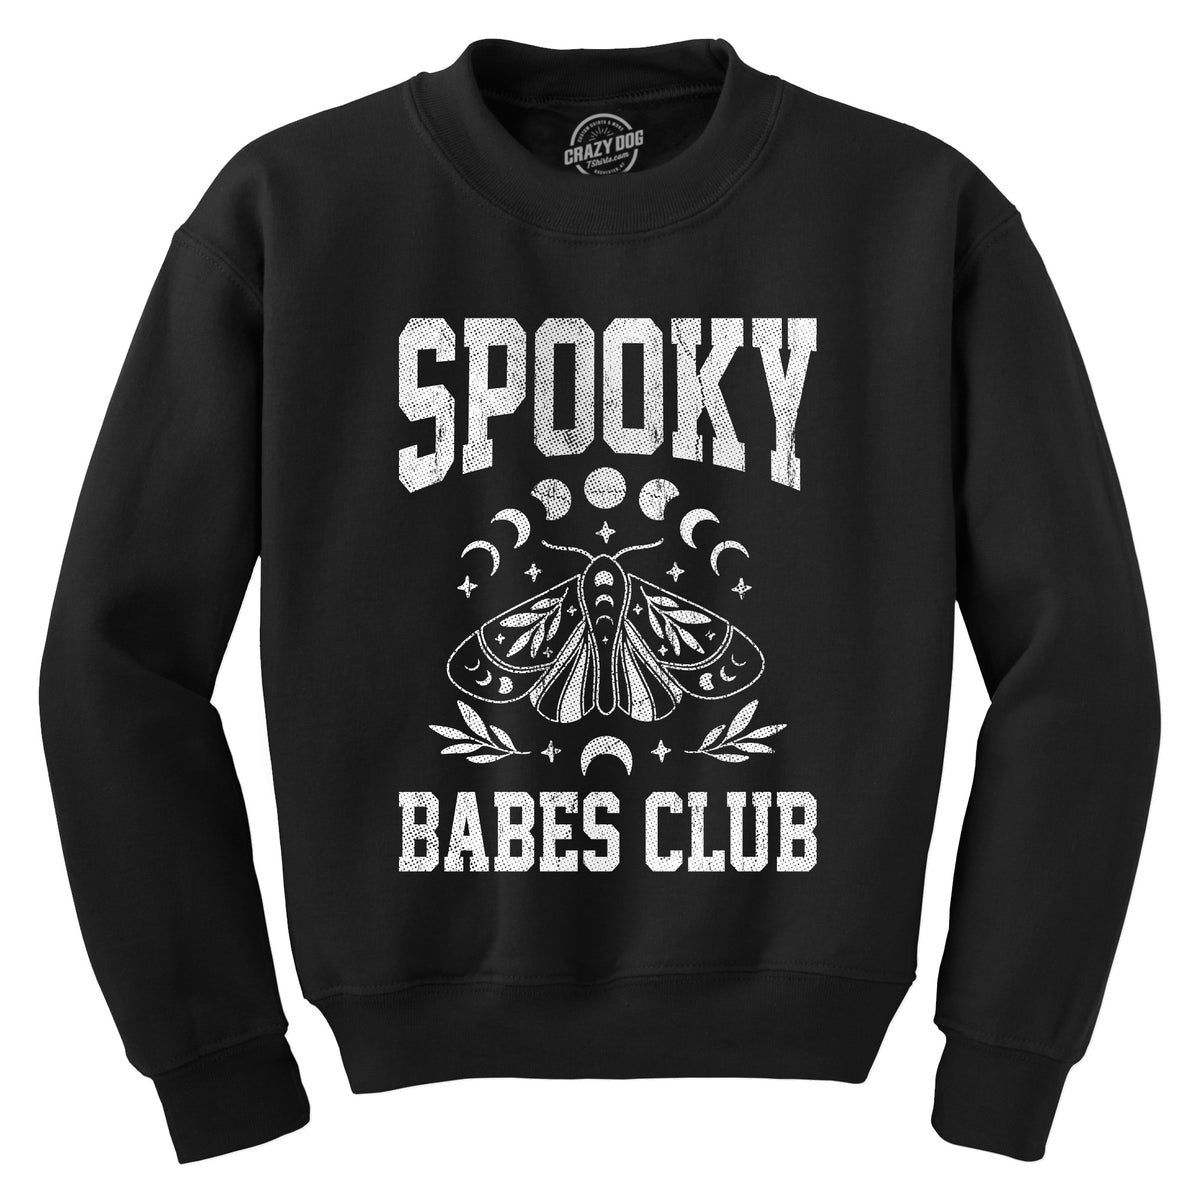 Funny Black - BABES Spooky Babes Club Sweatshirt Nerdy halloween Tee